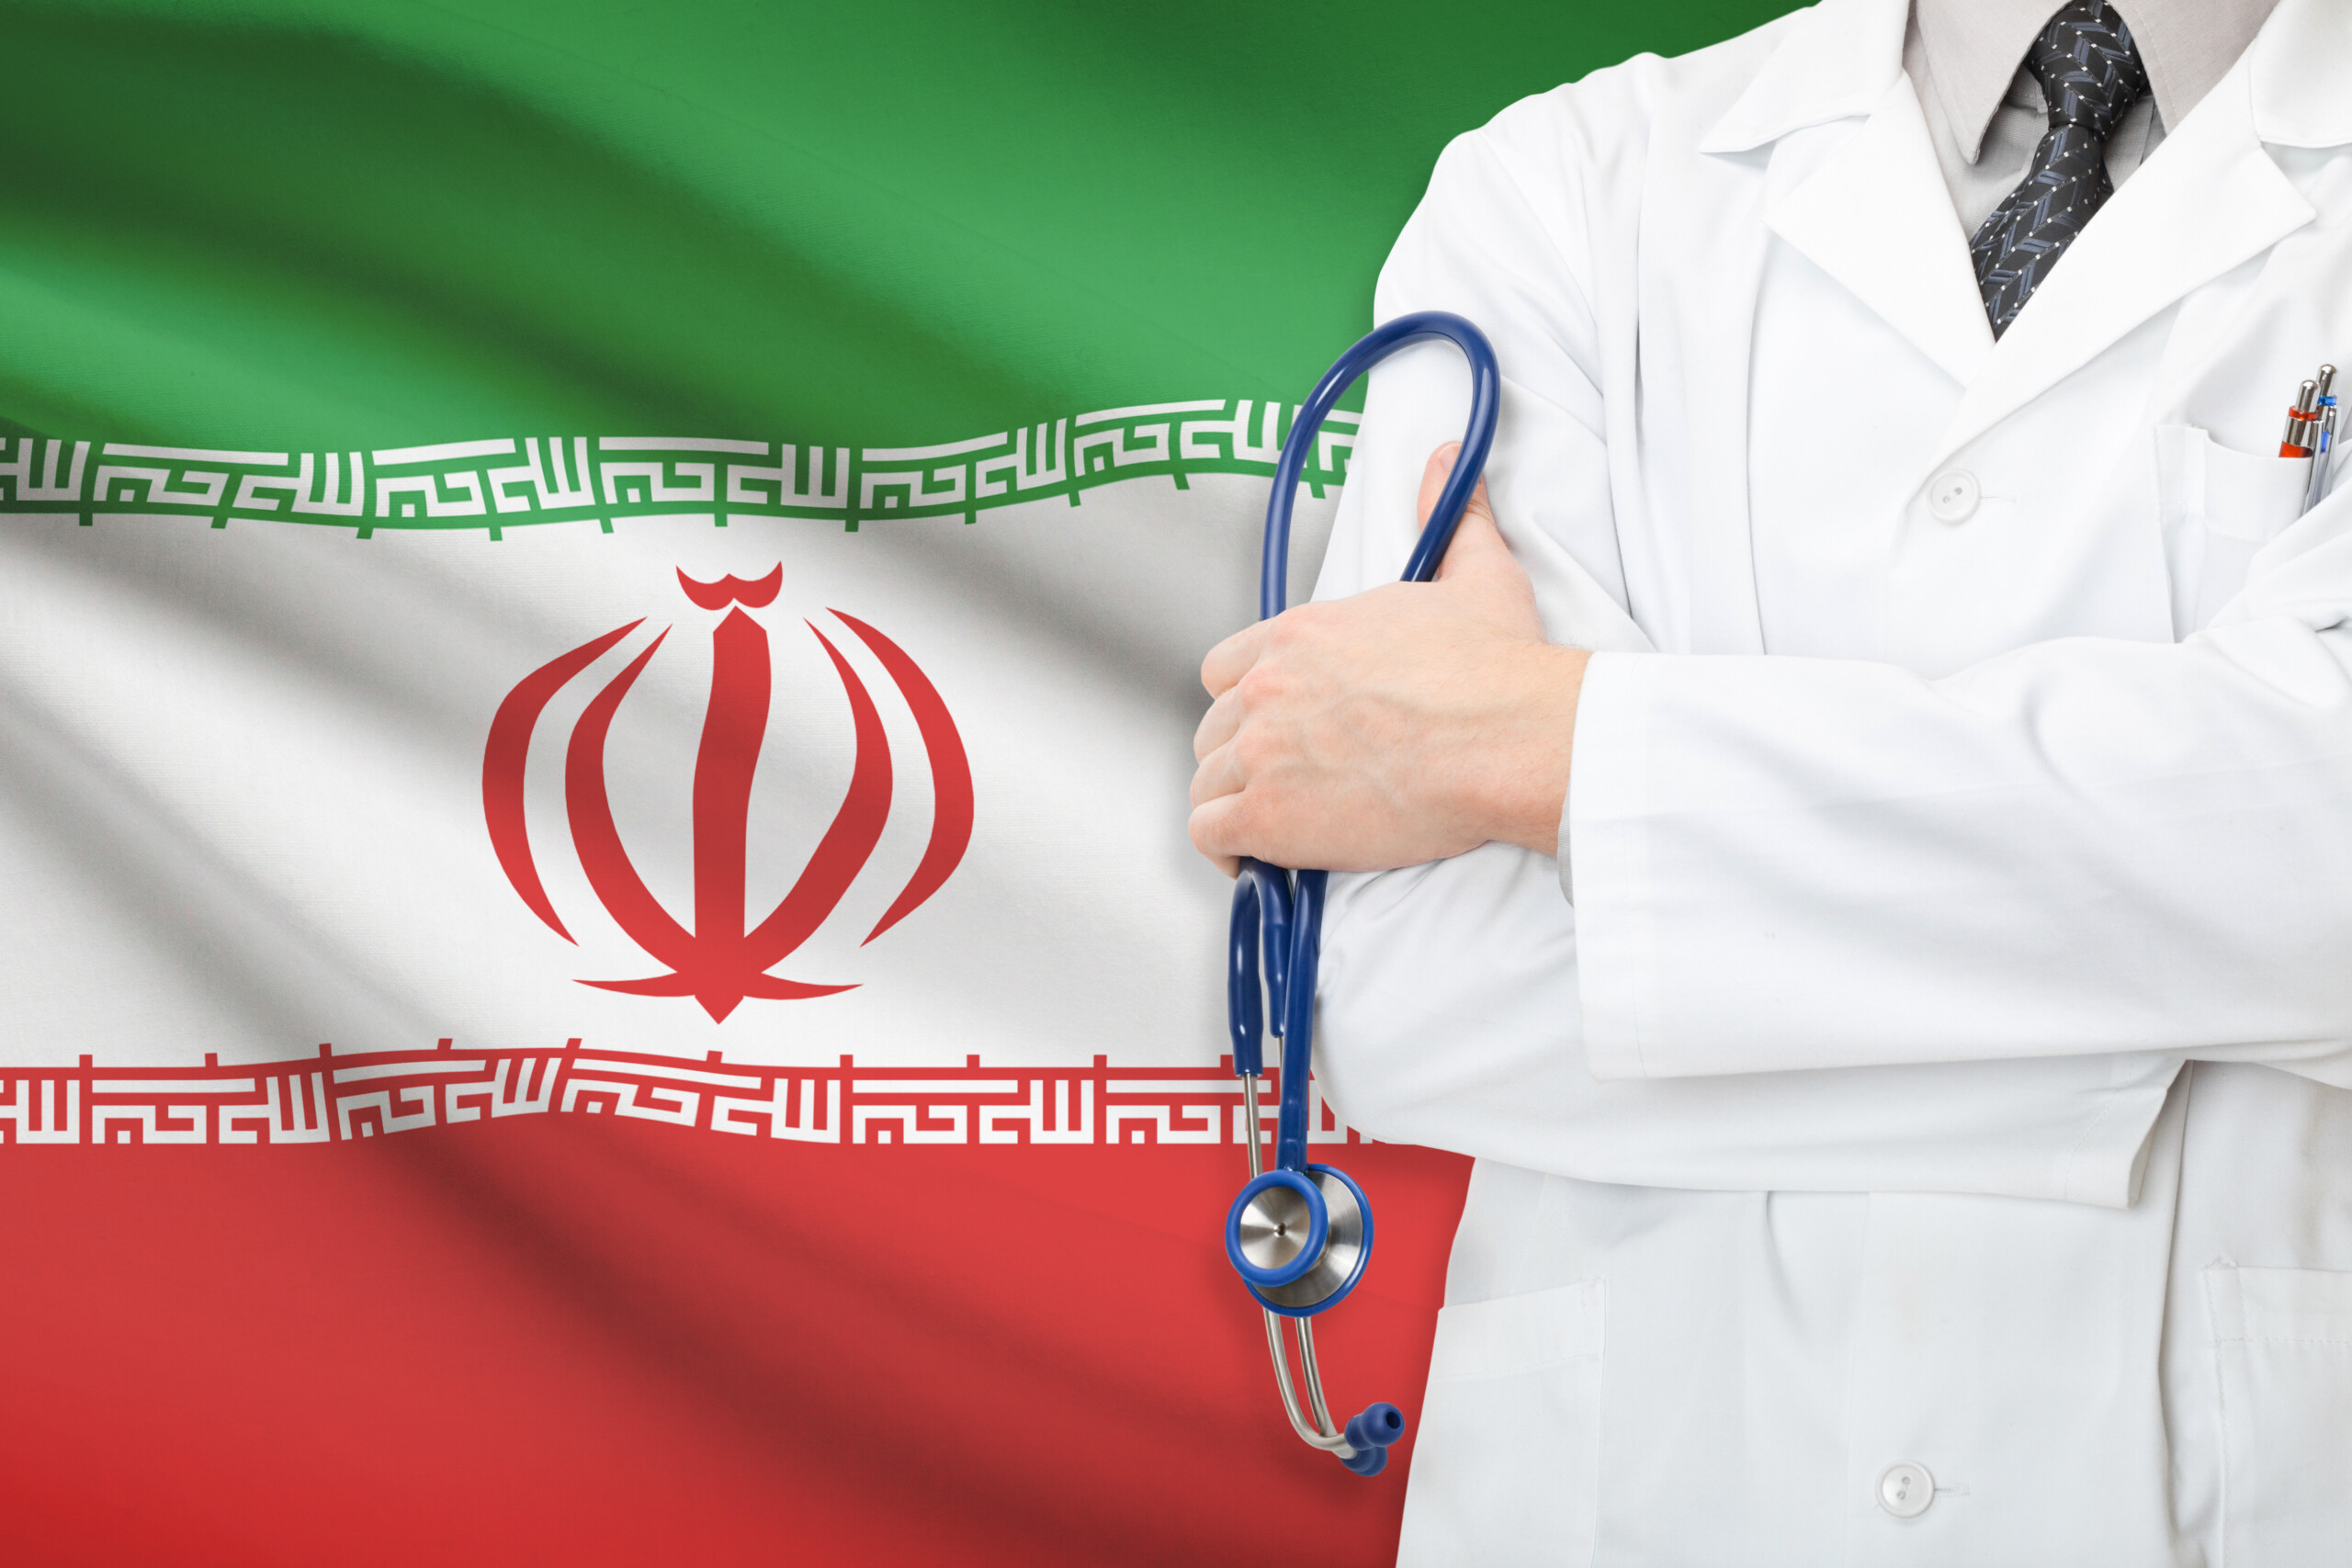 medical tourism in iran